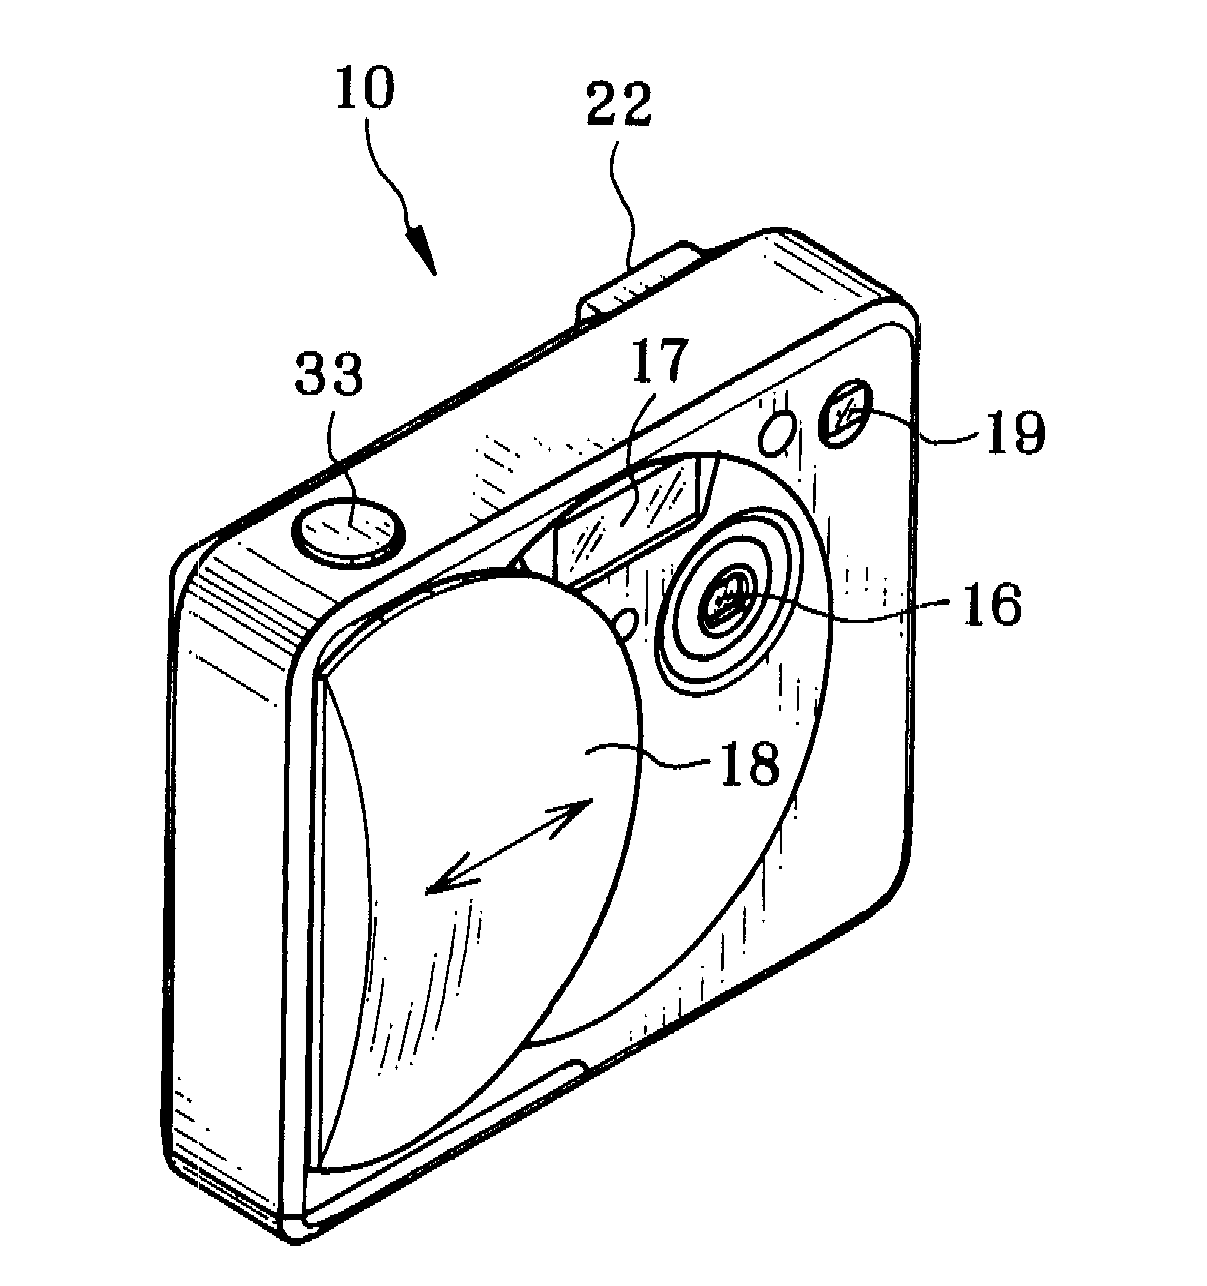 Image pickup apparatus and method